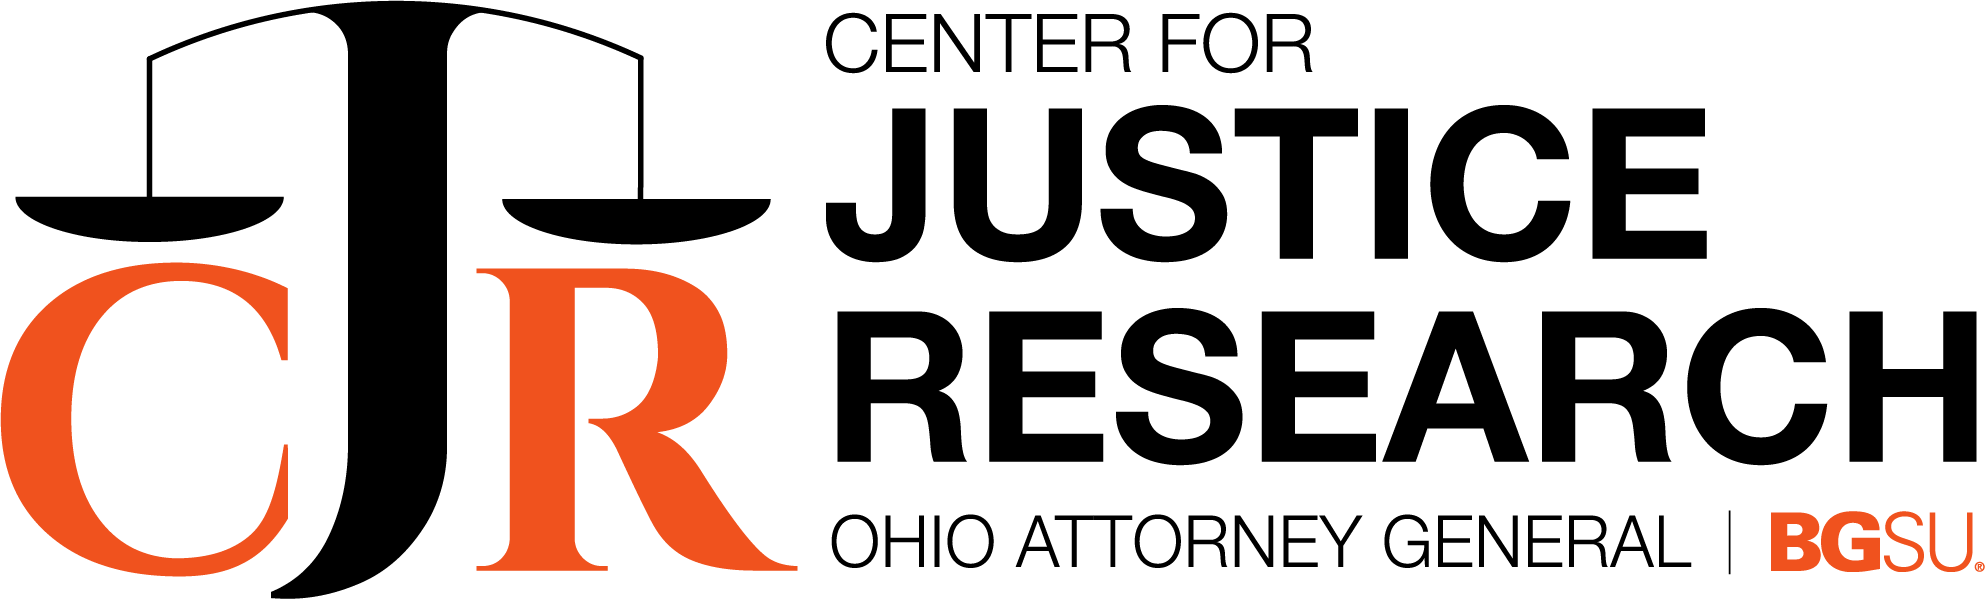 Criminal Justice Research Center logo